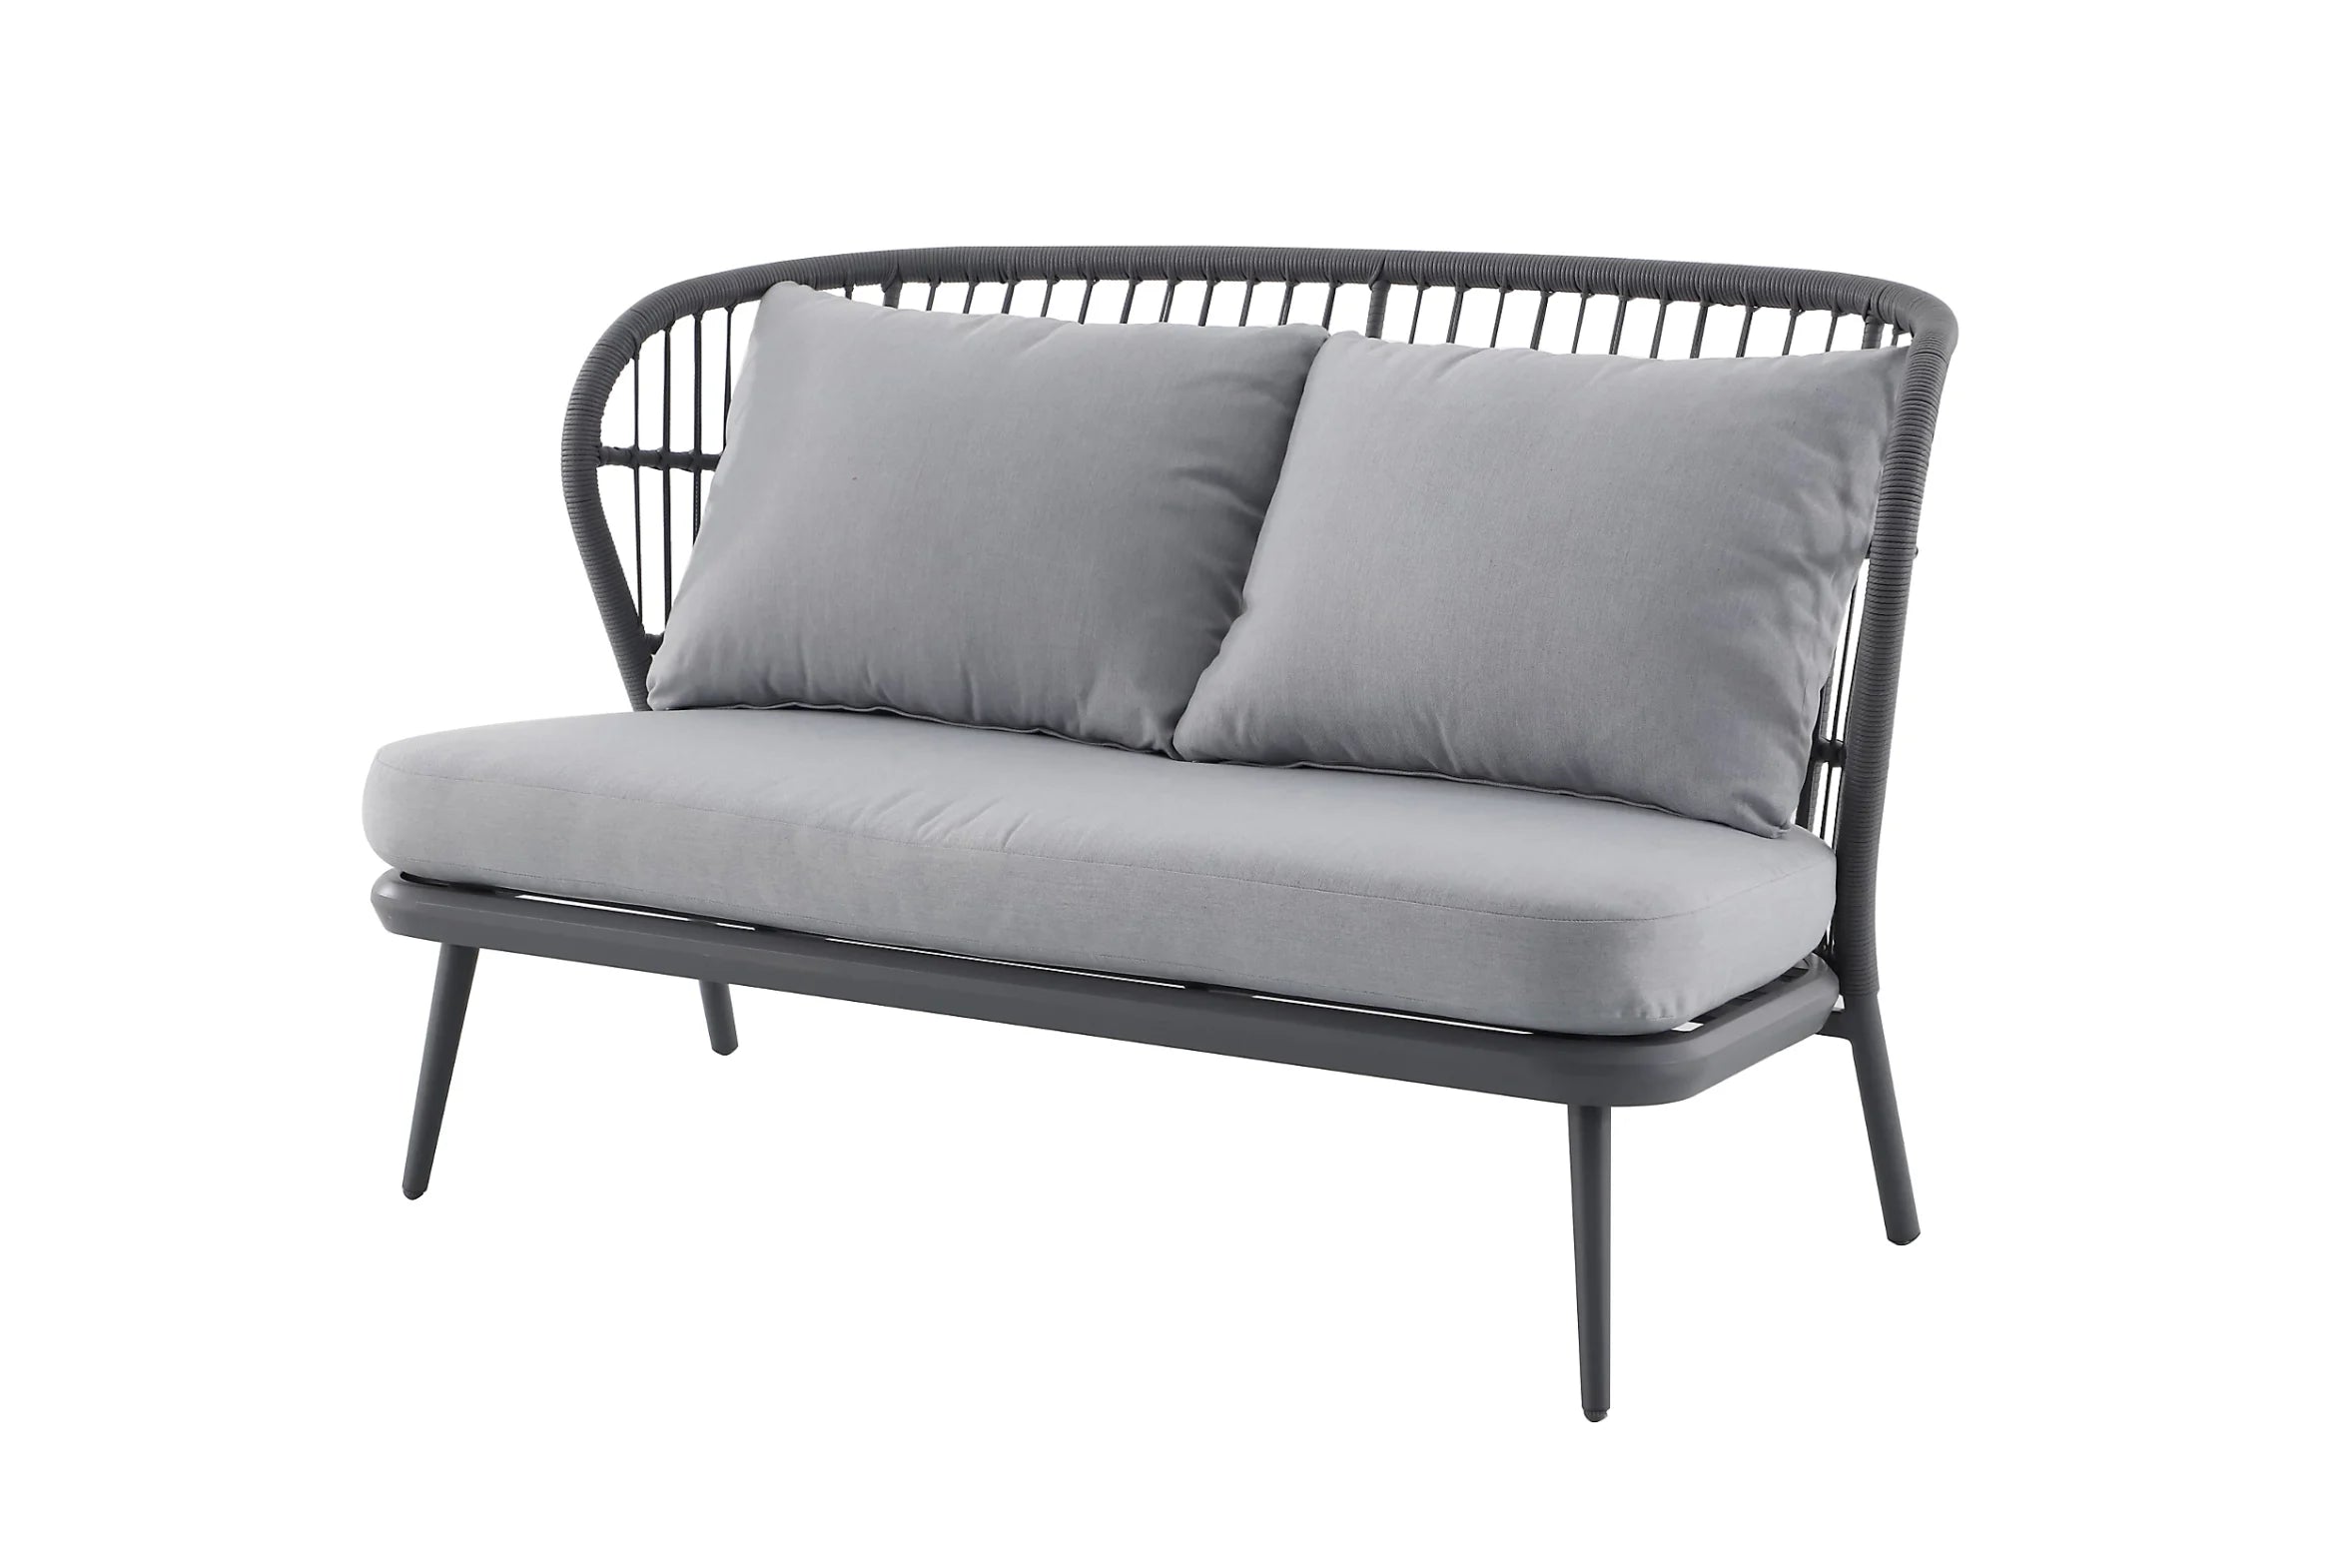 GoodHome Apolima Grey Aluminium 4 Seater Coffee set, Garden furniture set - Rattan Garden Furniture 8975